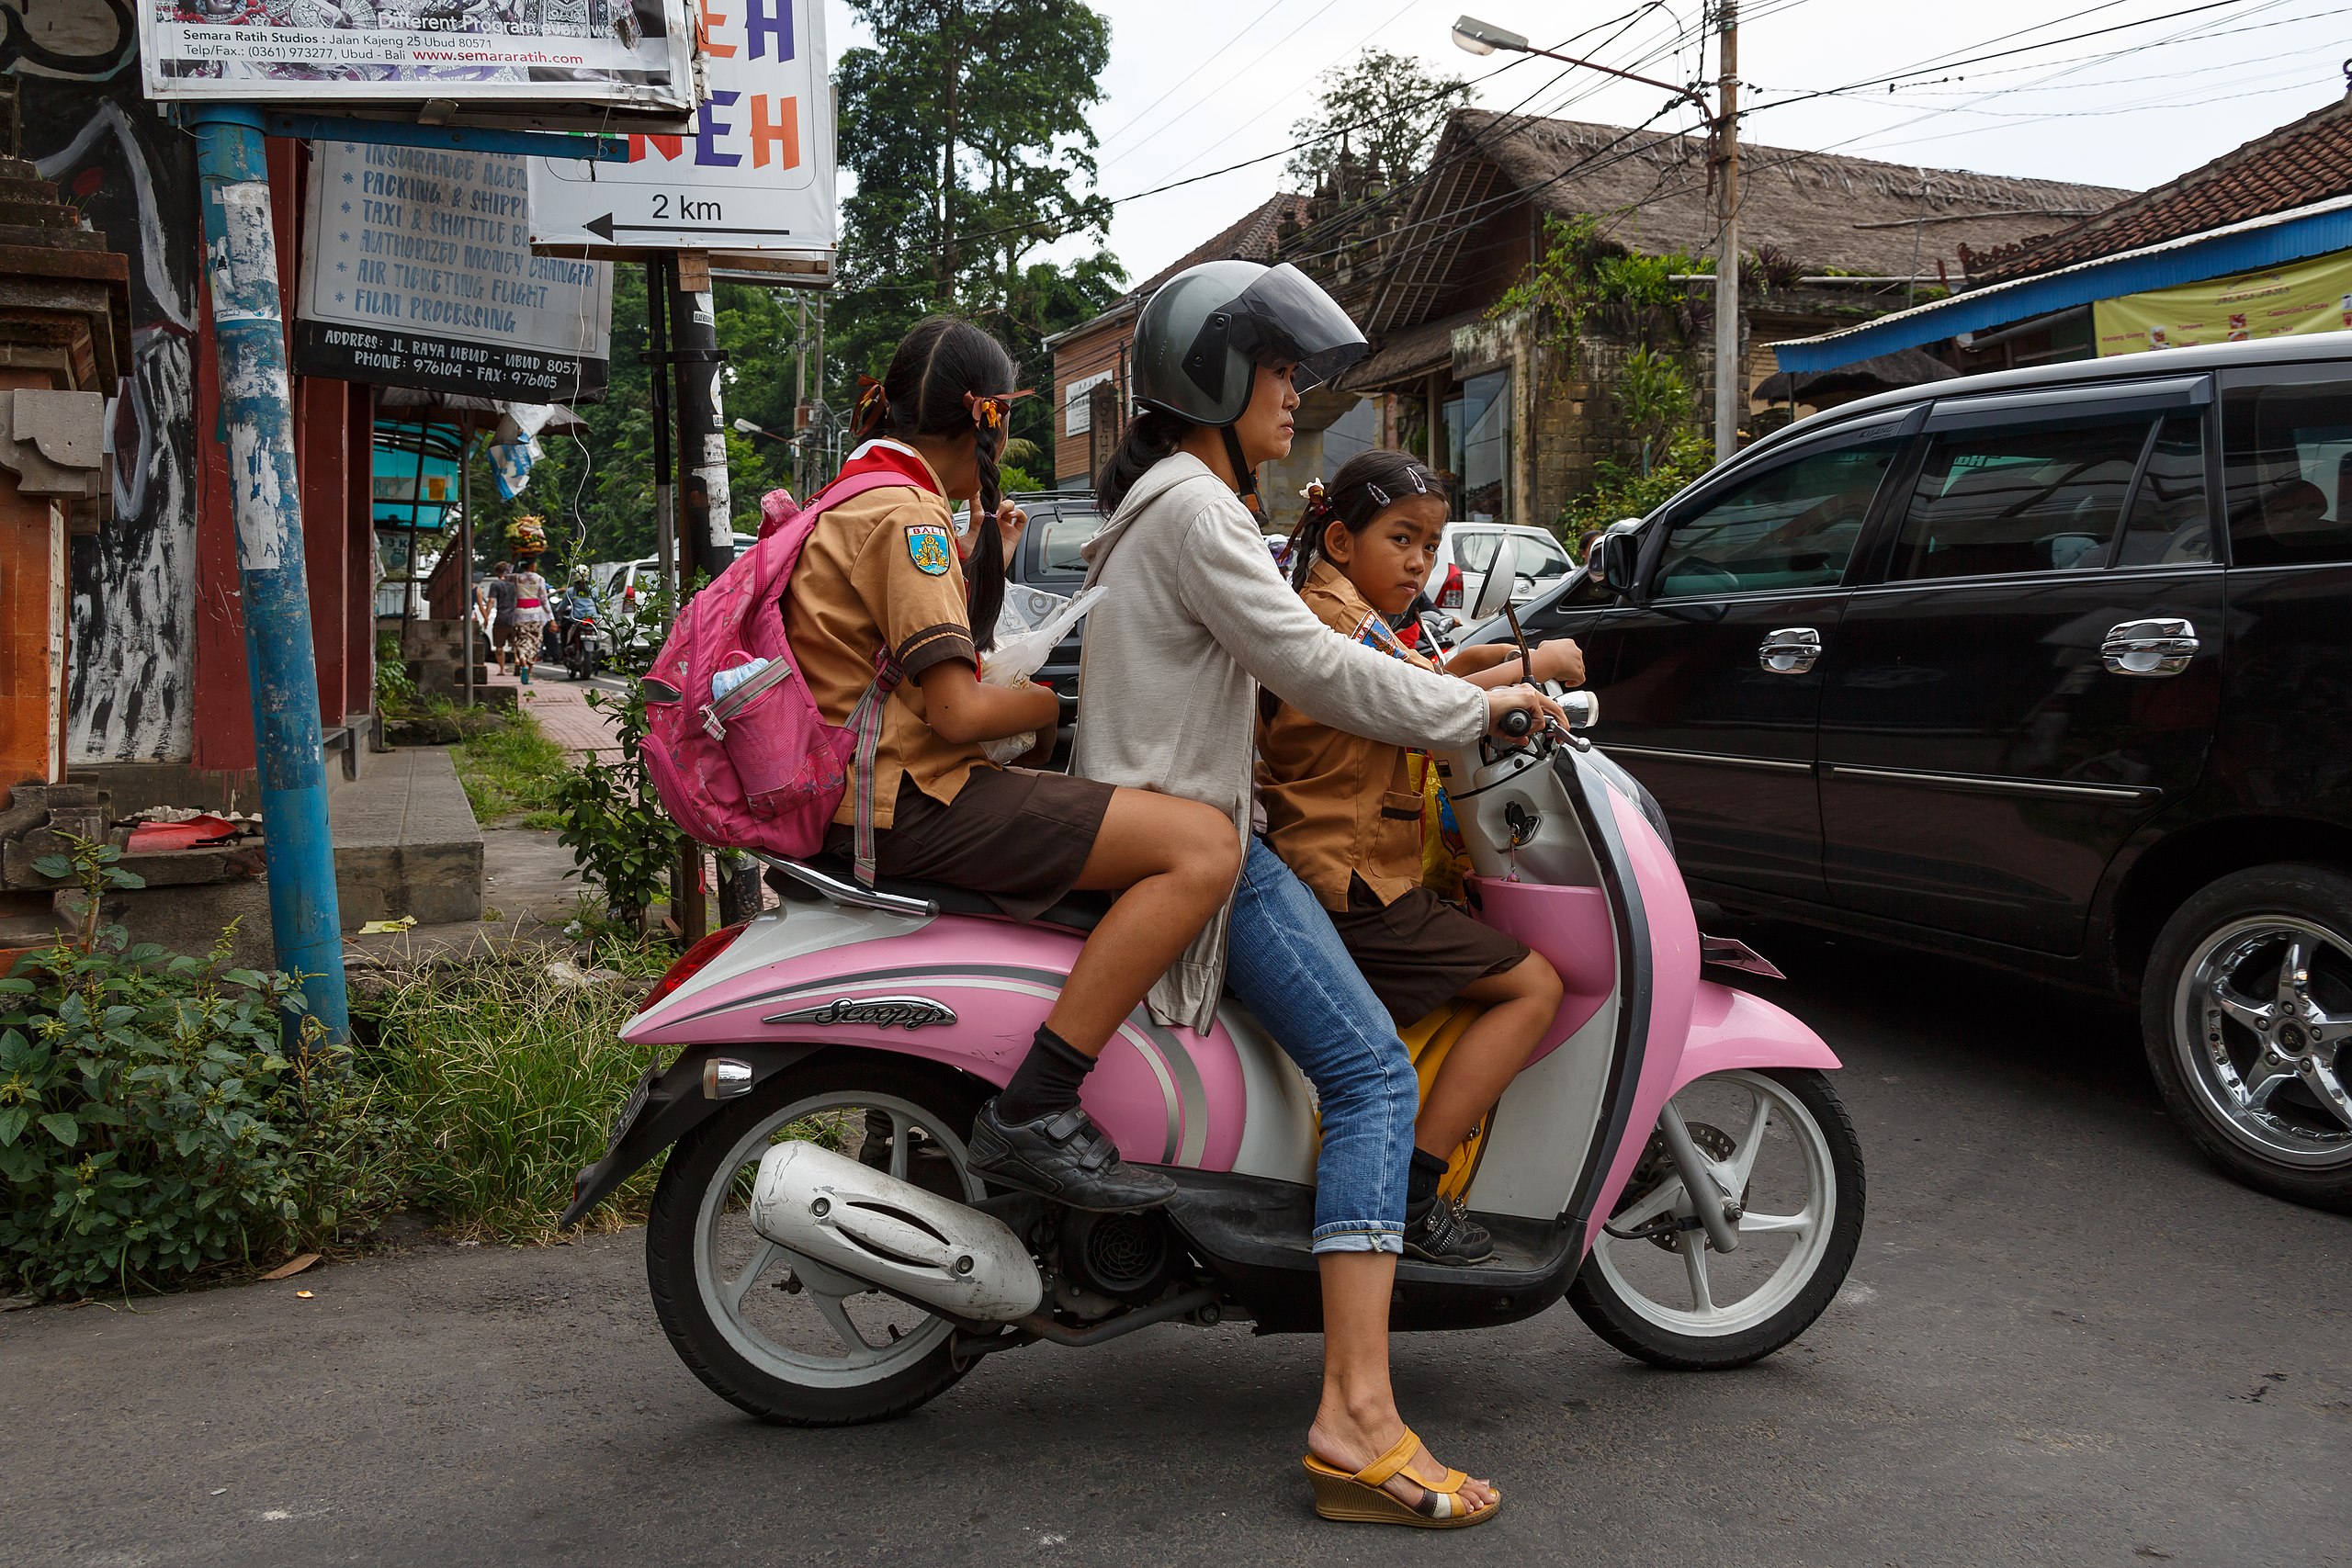 File:Ubud Bali Indonesia Motorcycle-at-Jalan-Raya-Ubud-01.jpg - Wikimedia Commons